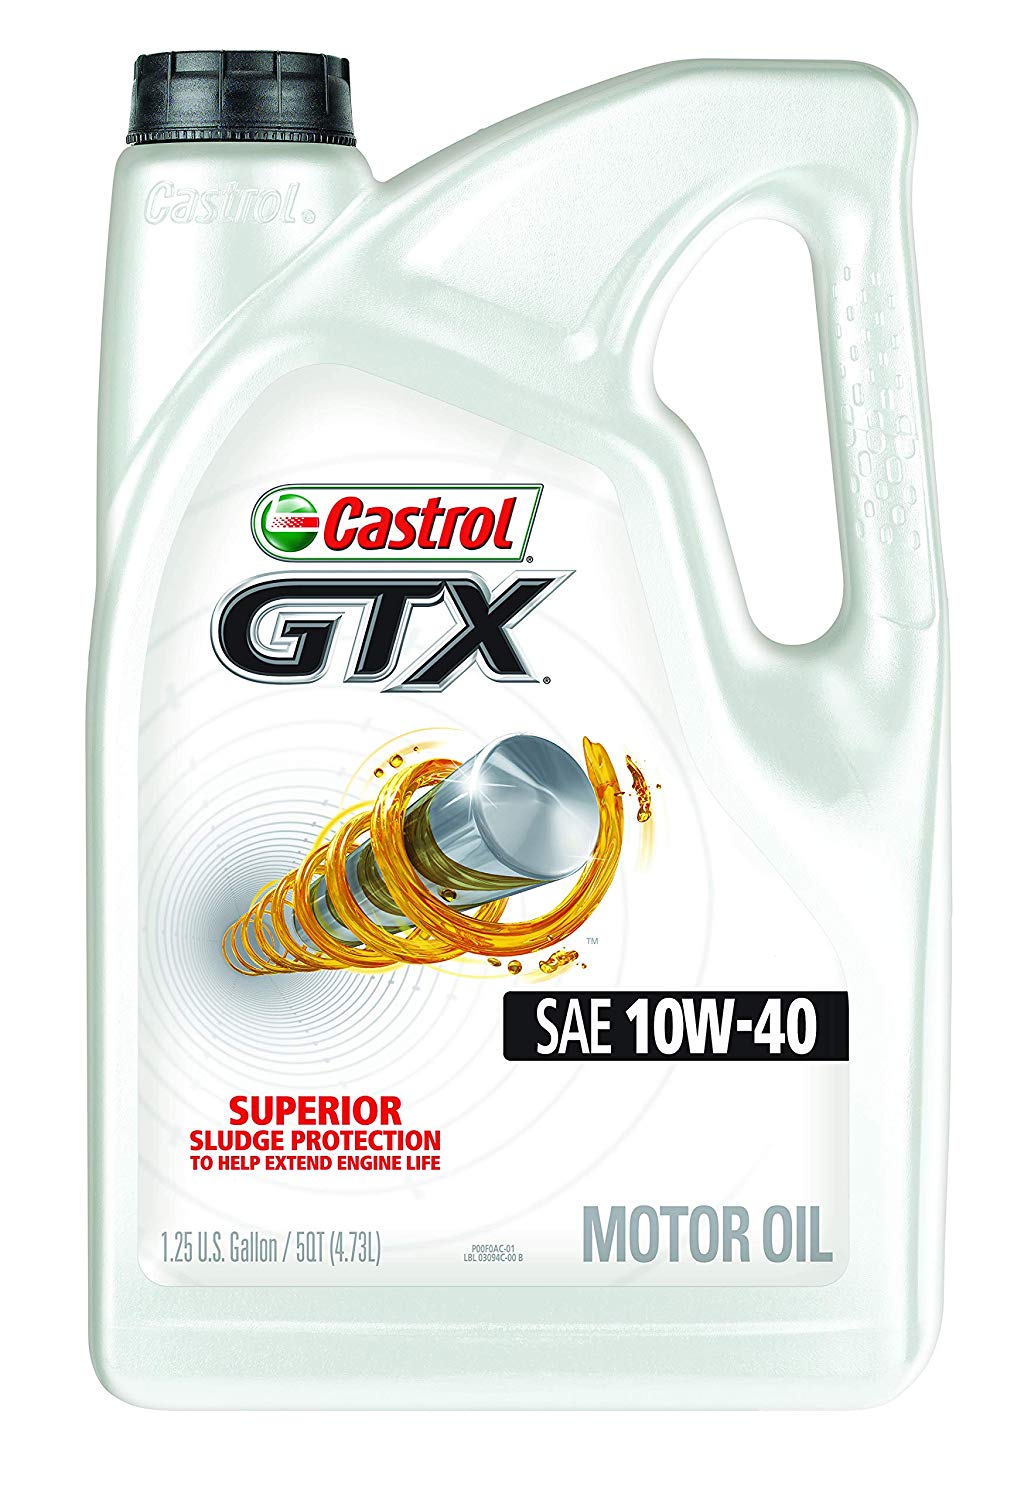 Castrol 03094 GTX 10W-40 Motor Oil, 5 Quart